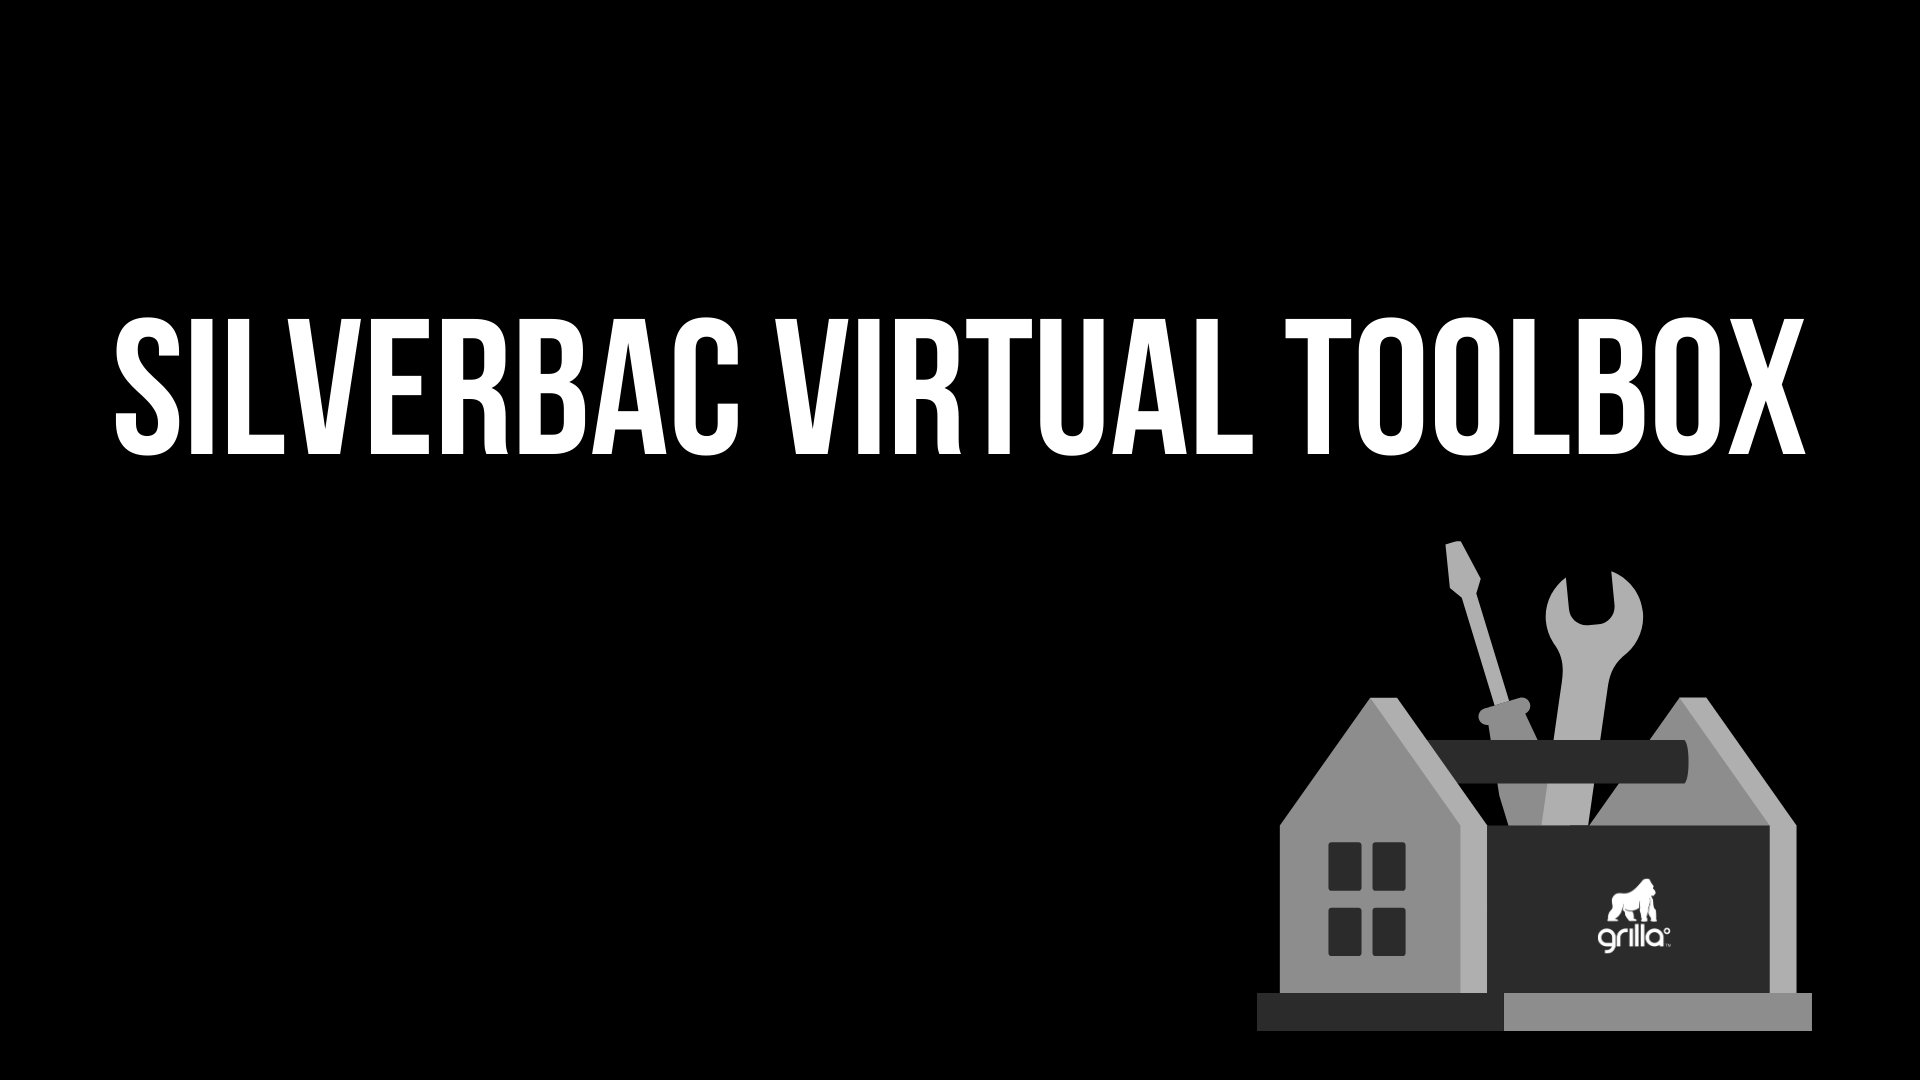 Silverbac Virtual Toolbox